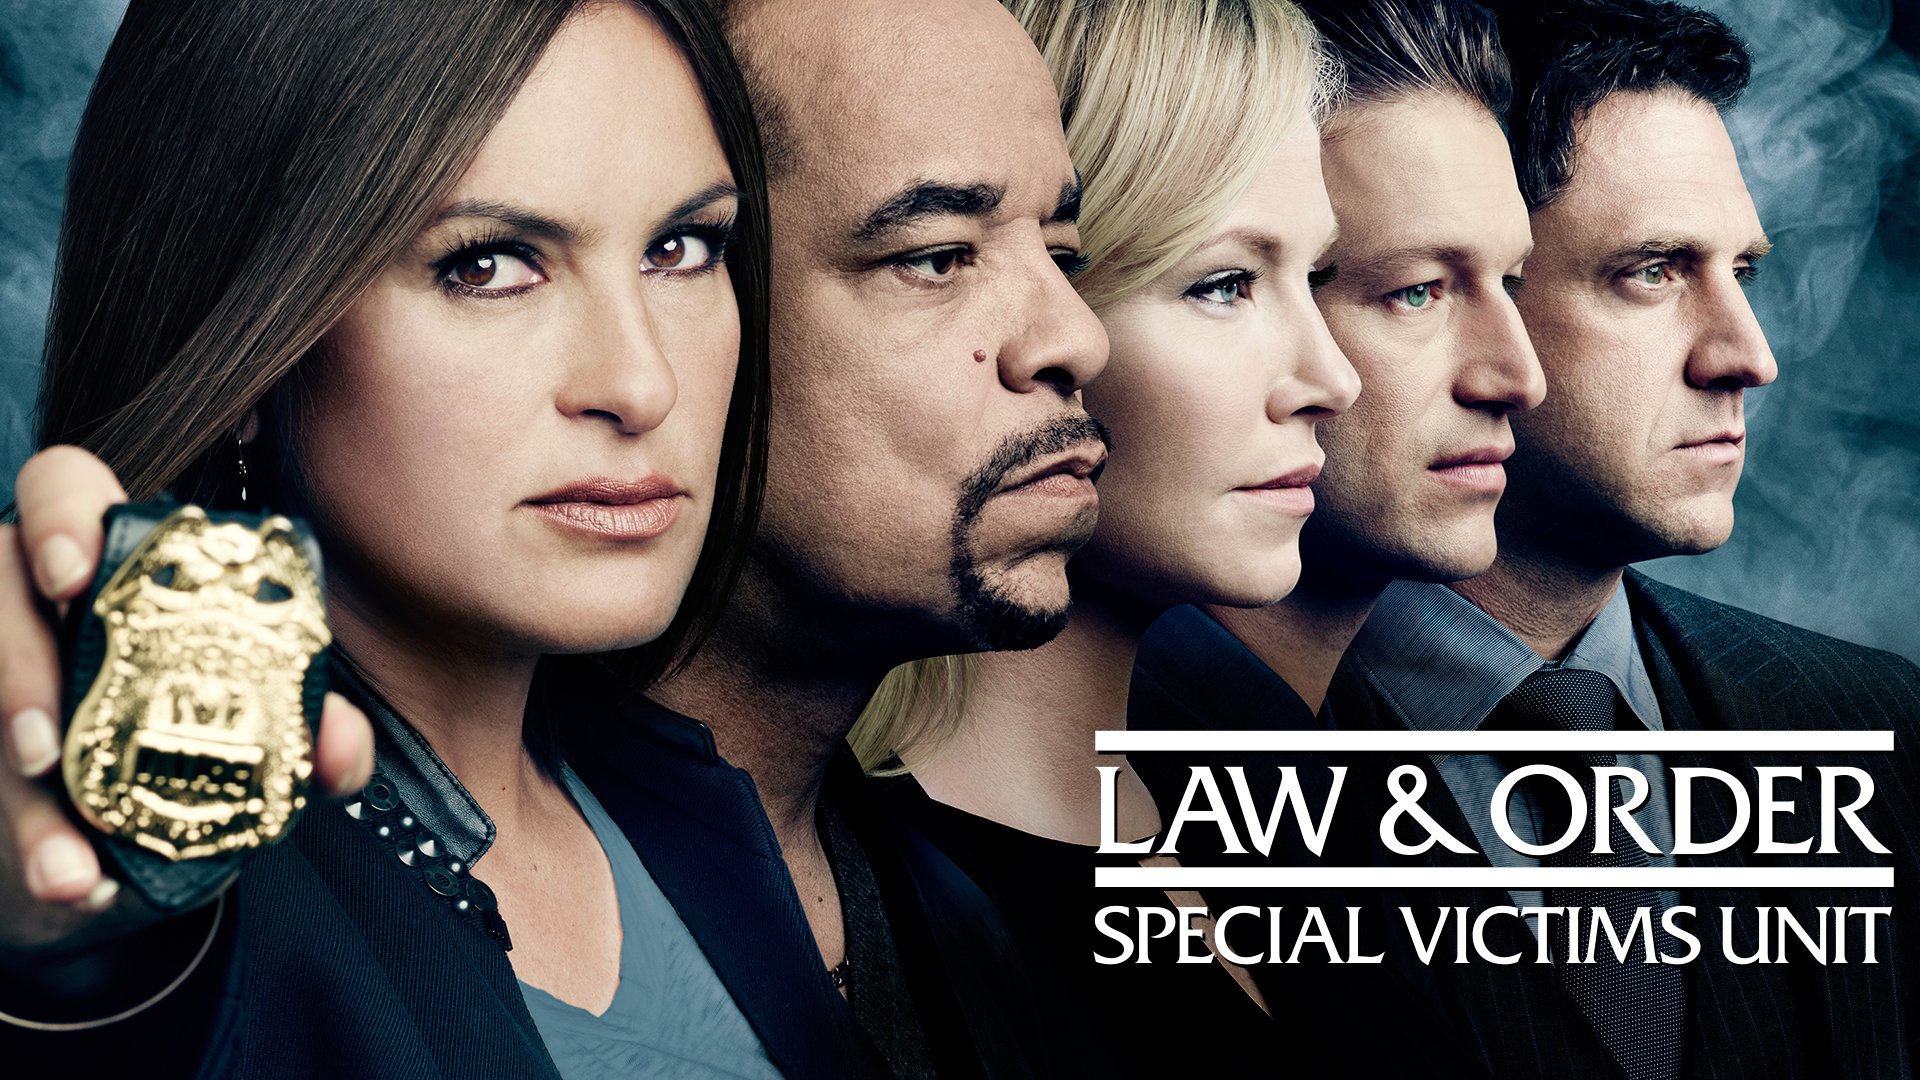 TV Show Law Amp Order Special Victims Unit 1920x1080